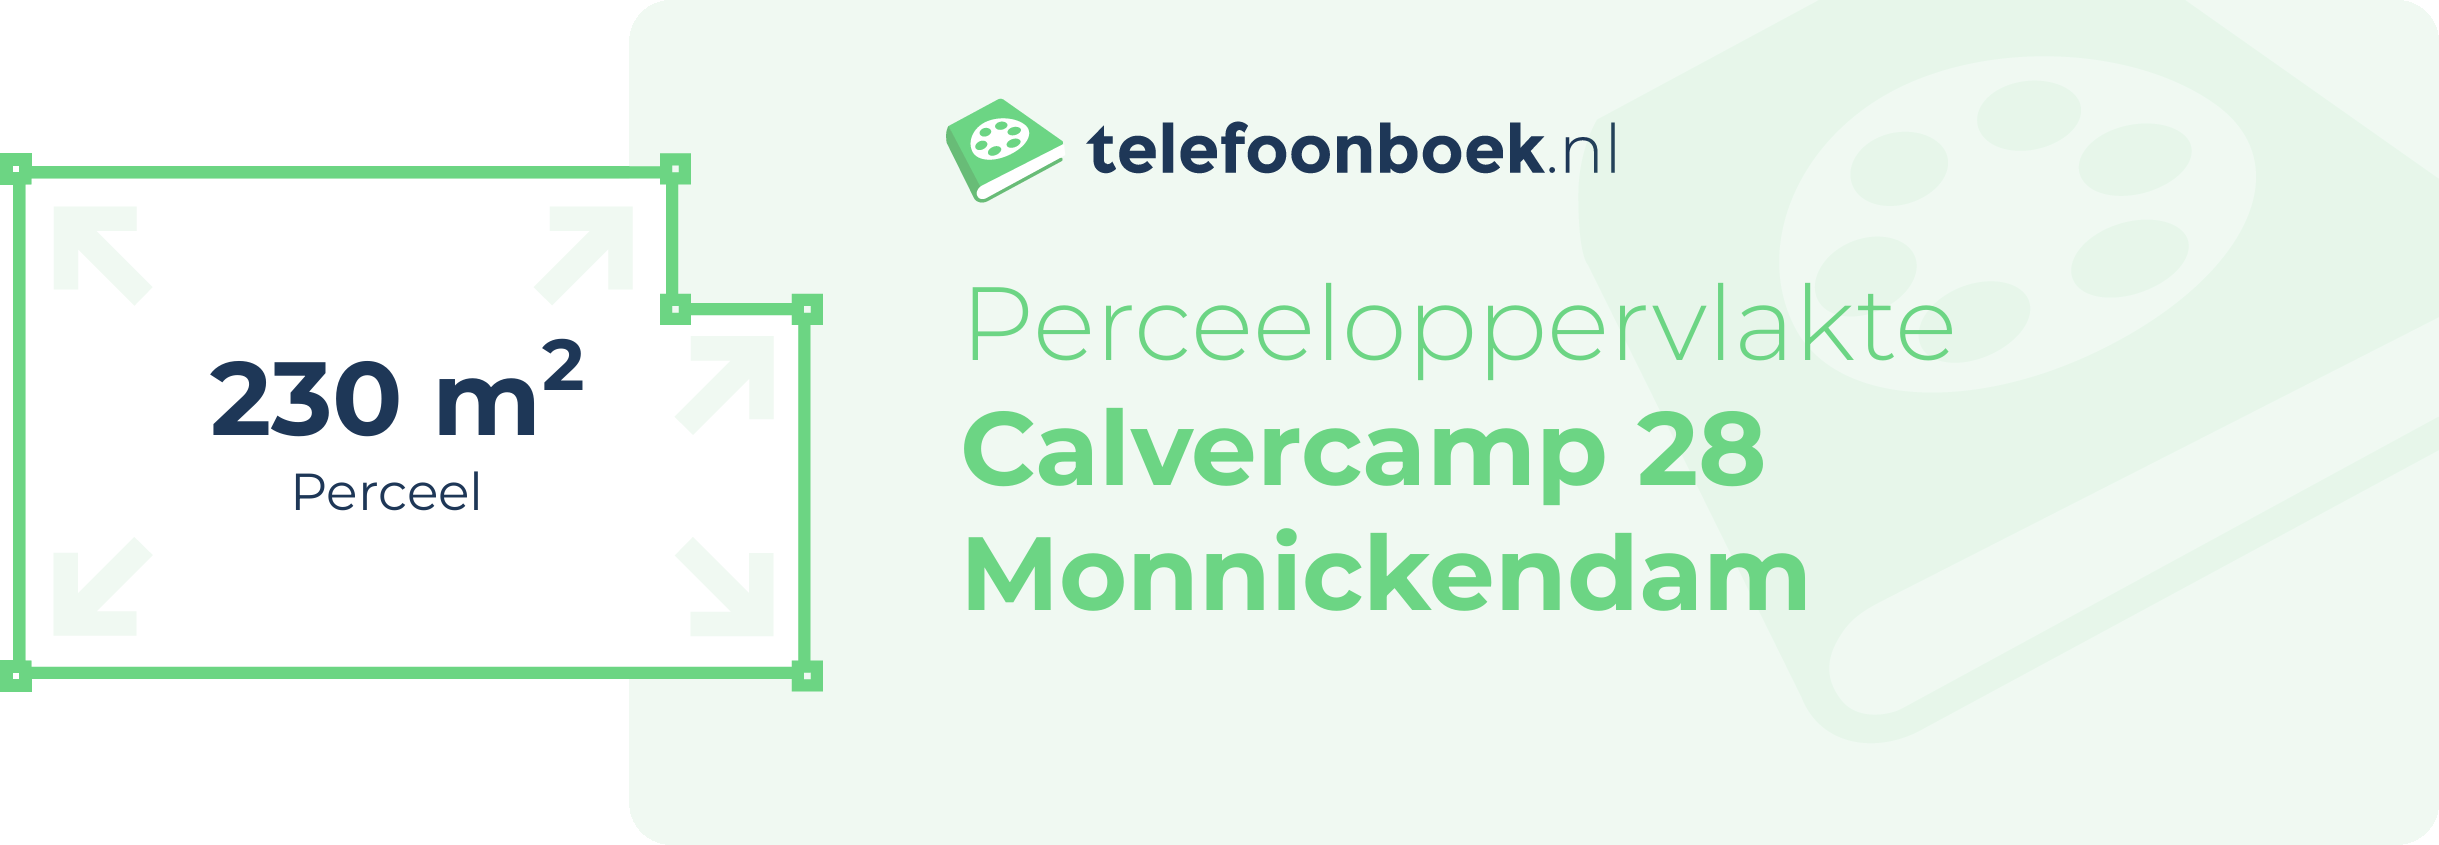 Perceeloppervlakte Calvercamp 28 Monnickendam